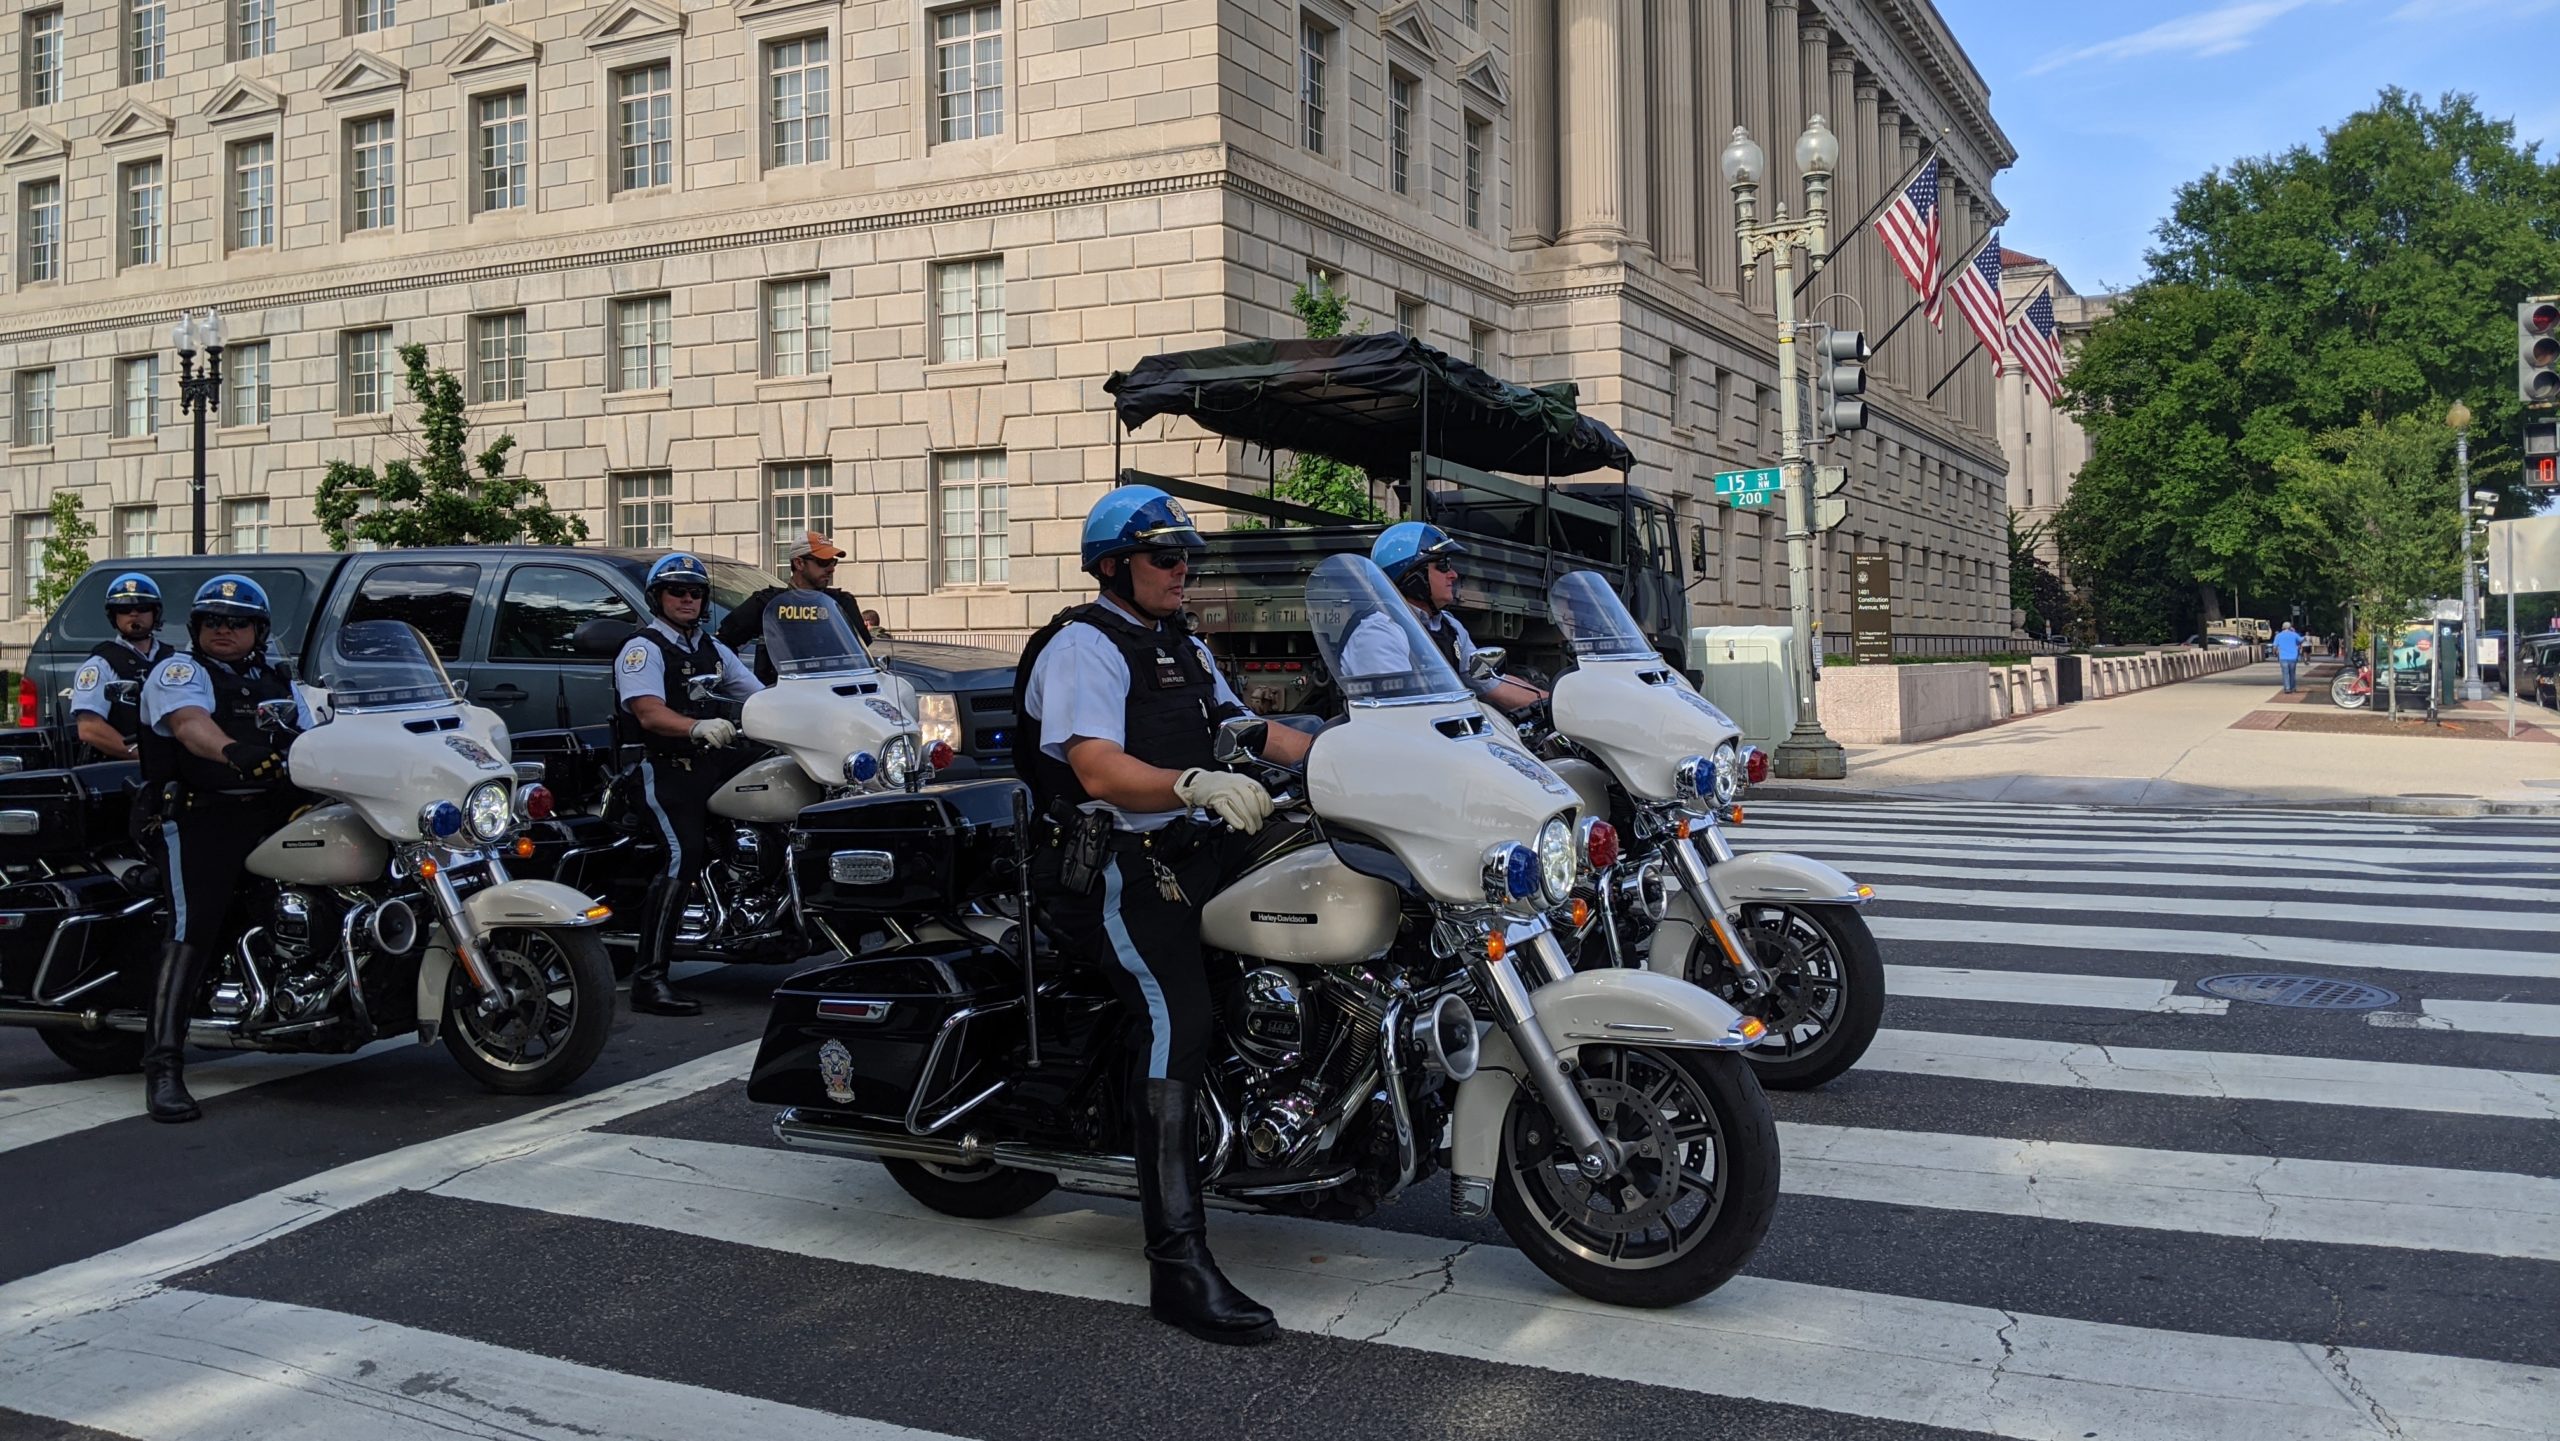 U.S. Park Police patrolling on motorcycles near the National Mall. (Photo: Tom McKay, Gizmodo)